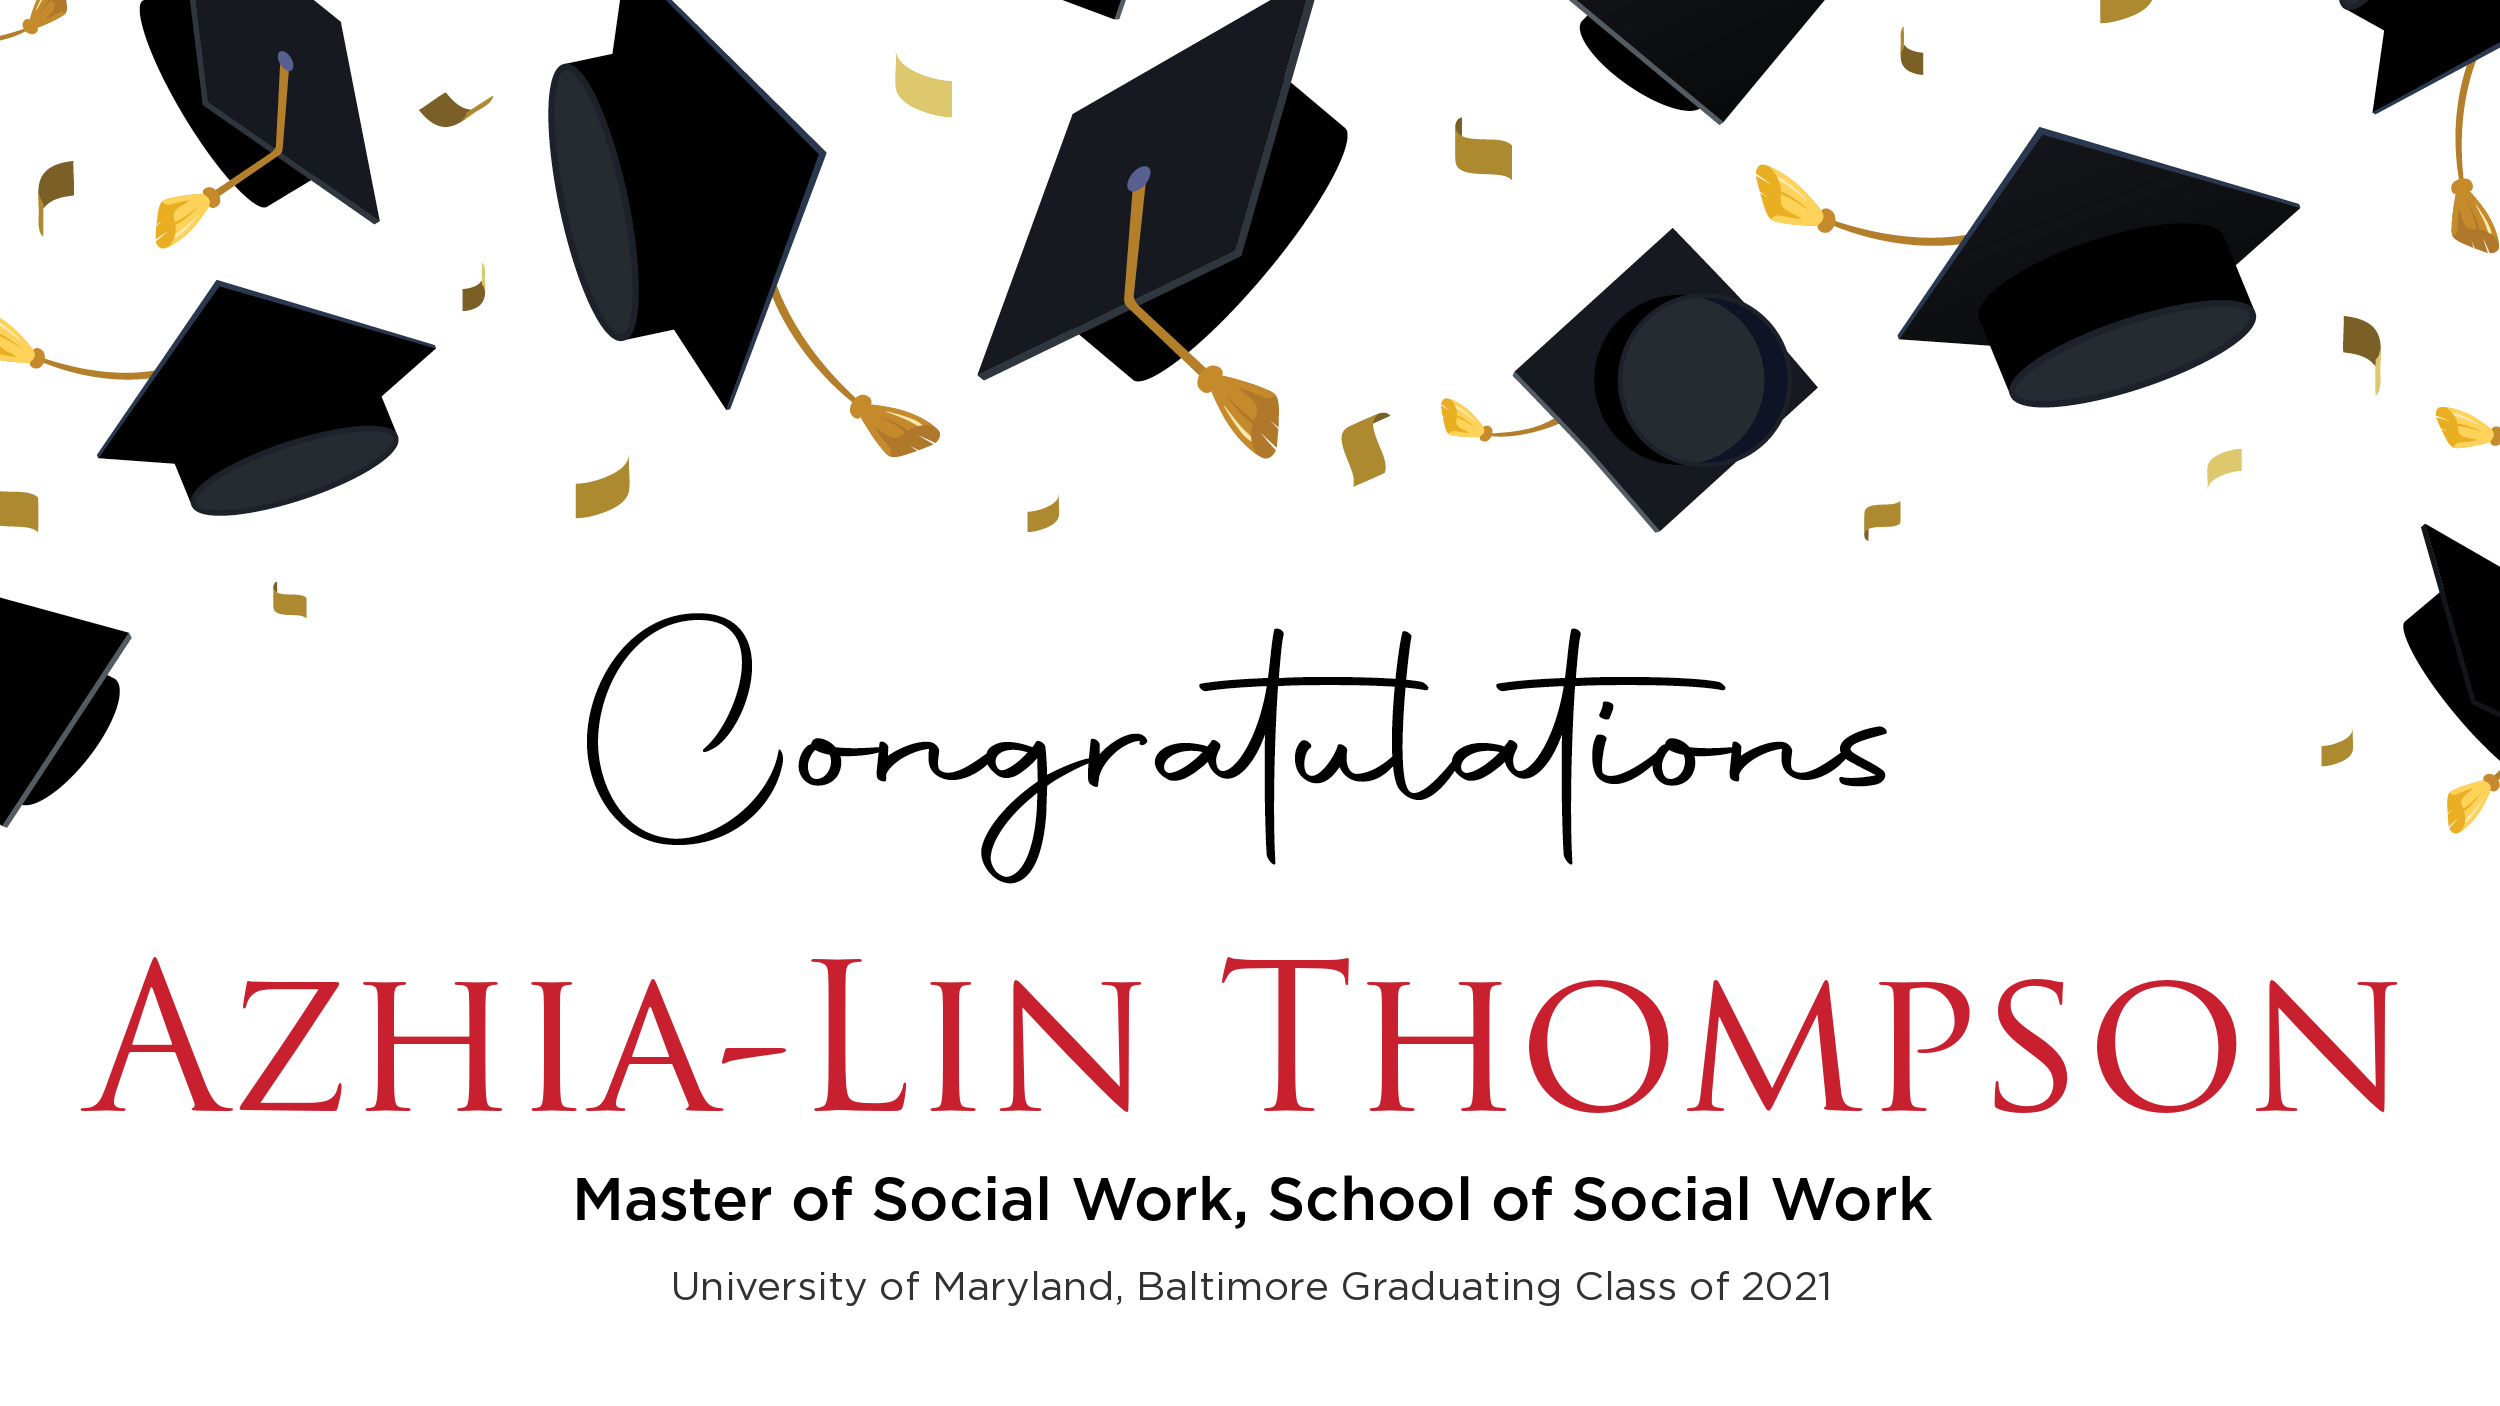 Congratulations Azhia-Lin Thompson, Master of Social Work